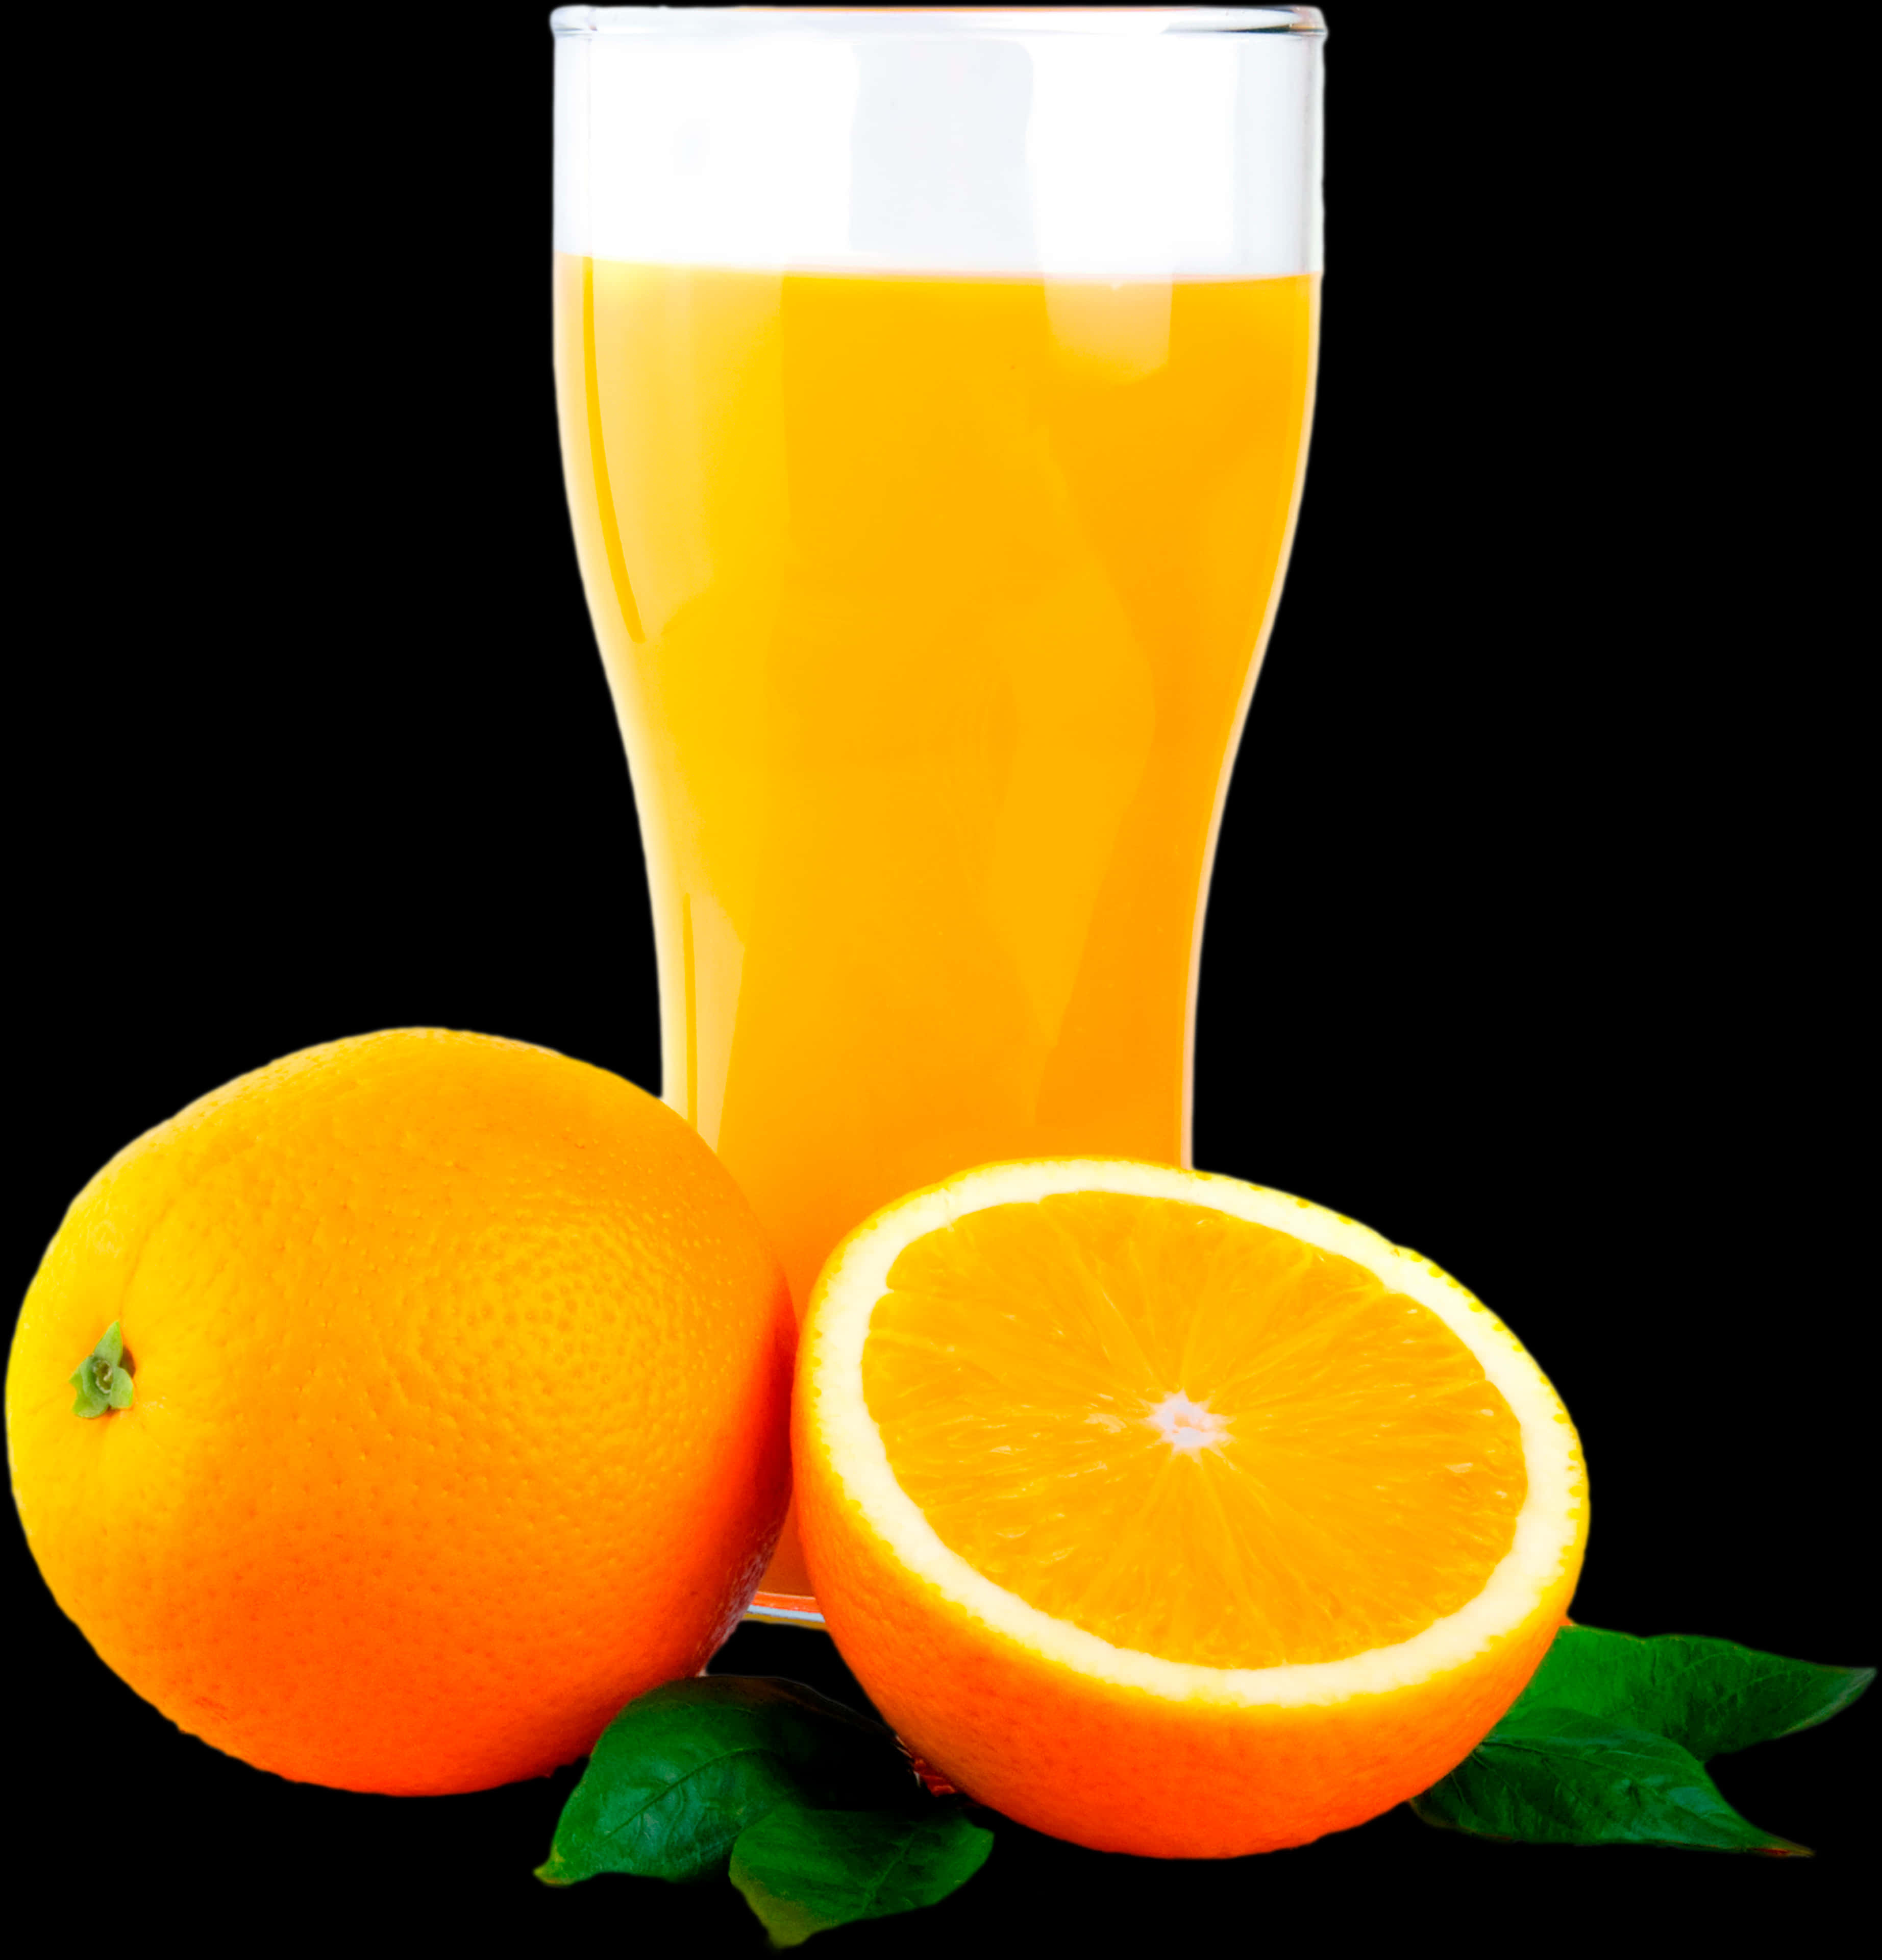 A Glass Of Orange Juice Next To An Orange